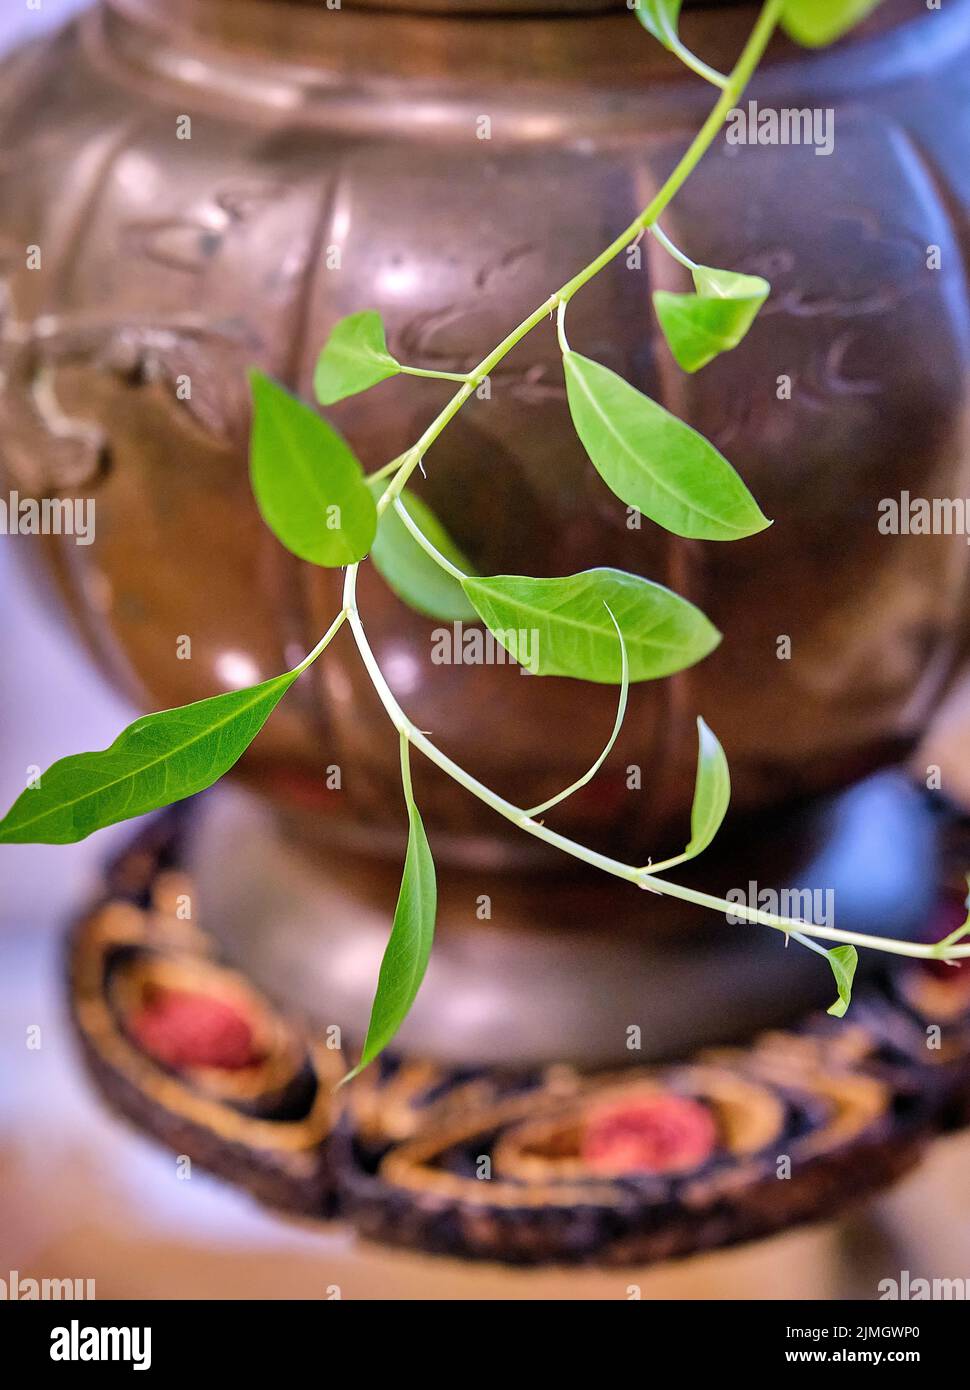 A green houseplant vine hangs outside a decorative brass pot. Stock Photo